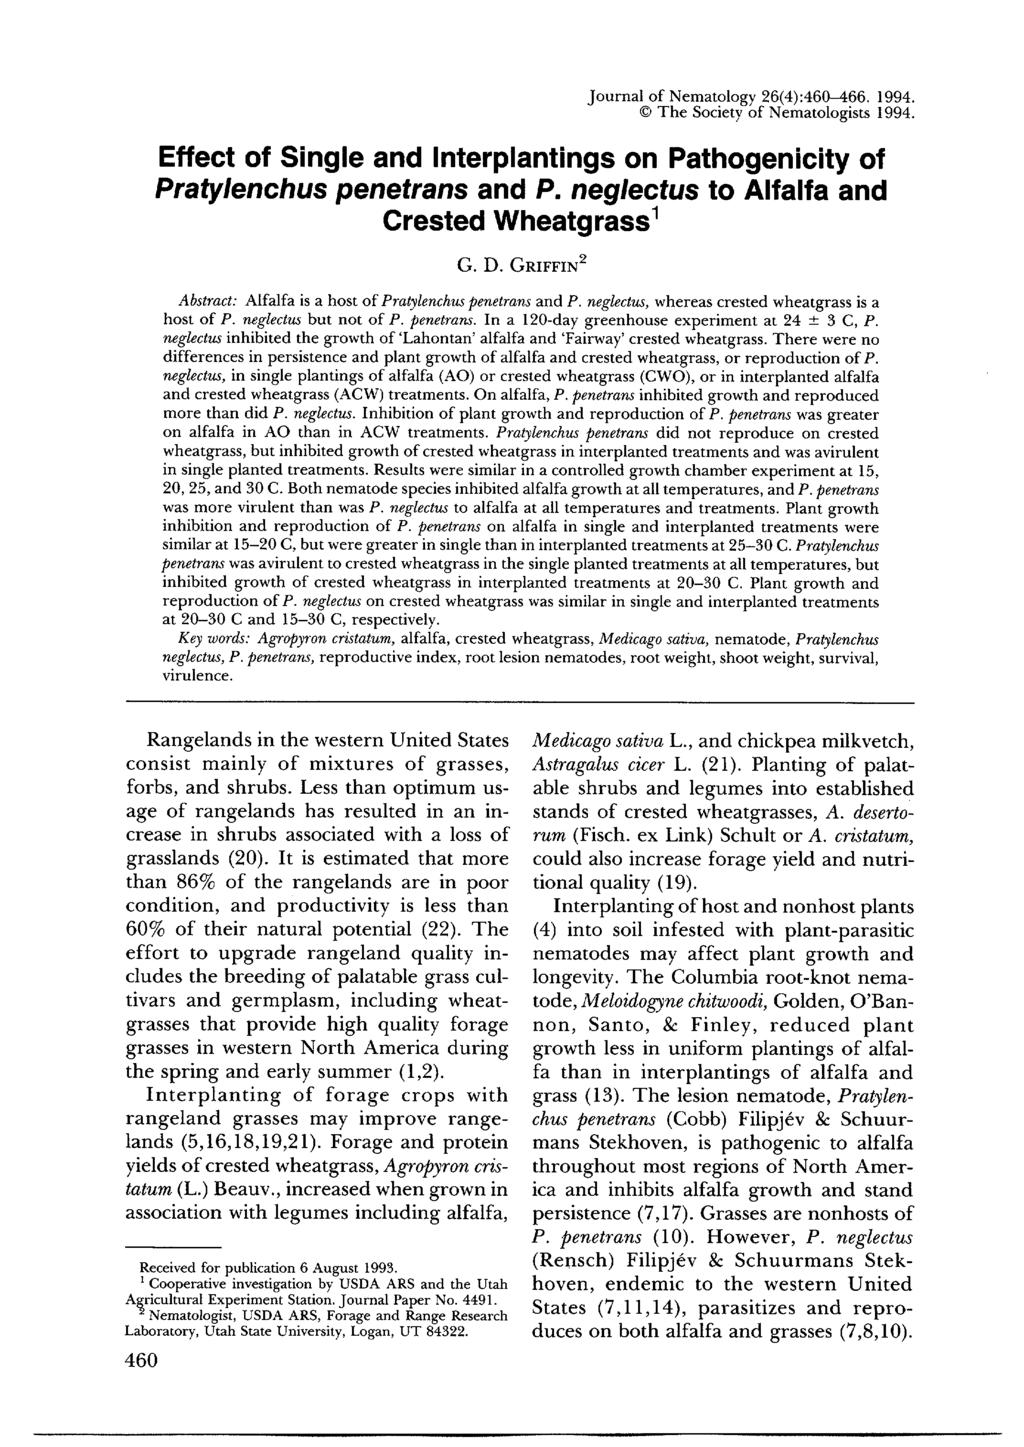 Journal of Nematology 26(4):46-466. 1994. The Society of Nematologists 1994. Effect of Single and Interplantings on Pathogenicity of Pratylenchus penetrans and P.